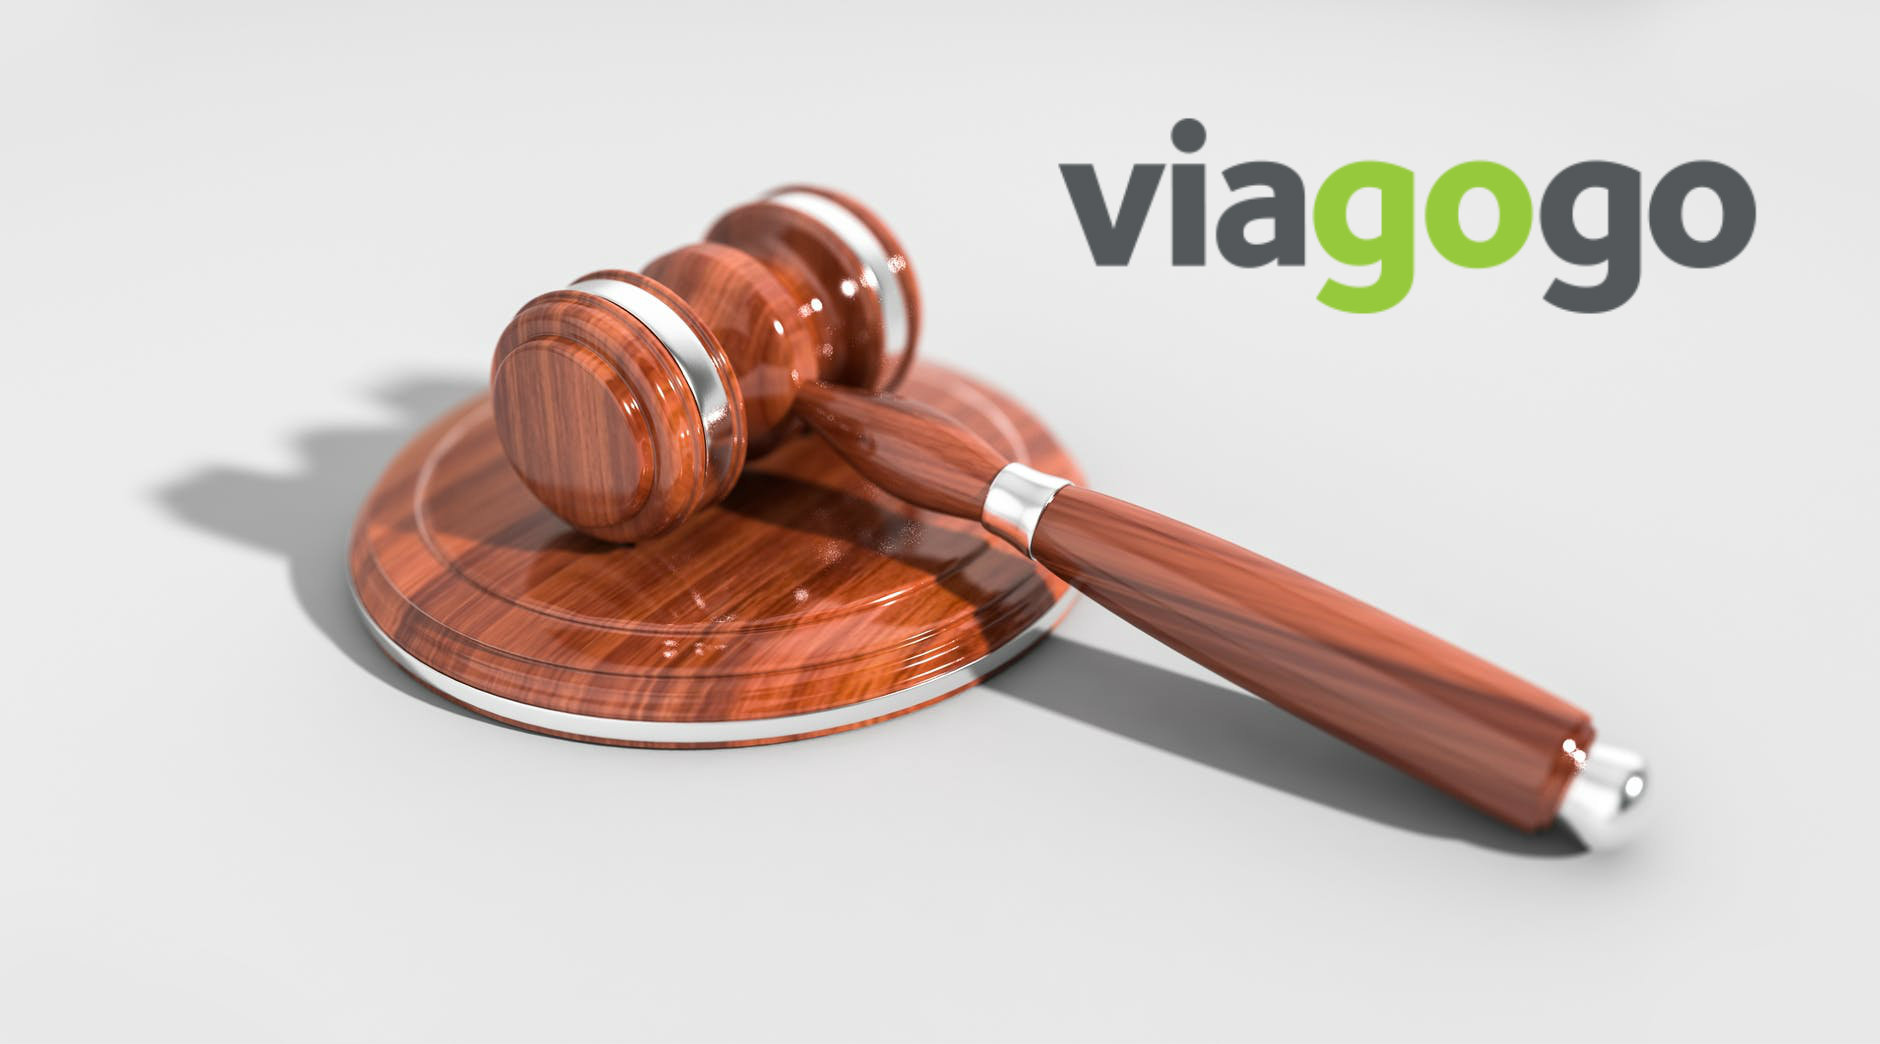 UK’s advertising authority says Viagogo ads not deceptive, creates anger within music industry